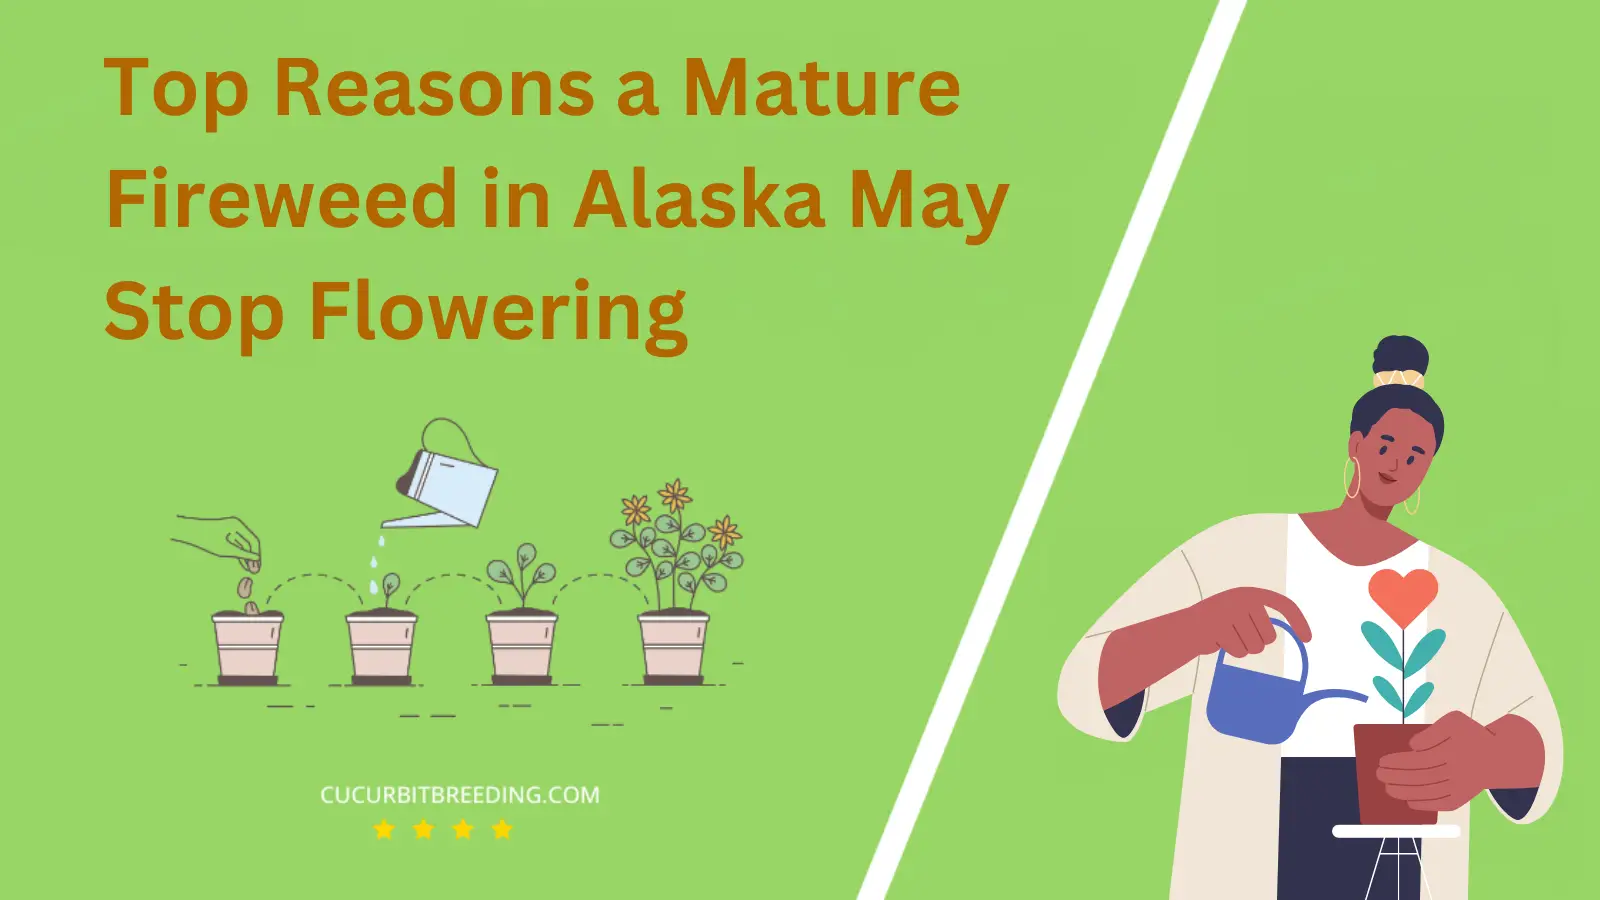 Top Reasons a Mature Fireweed in Alaska May Stop Flowering